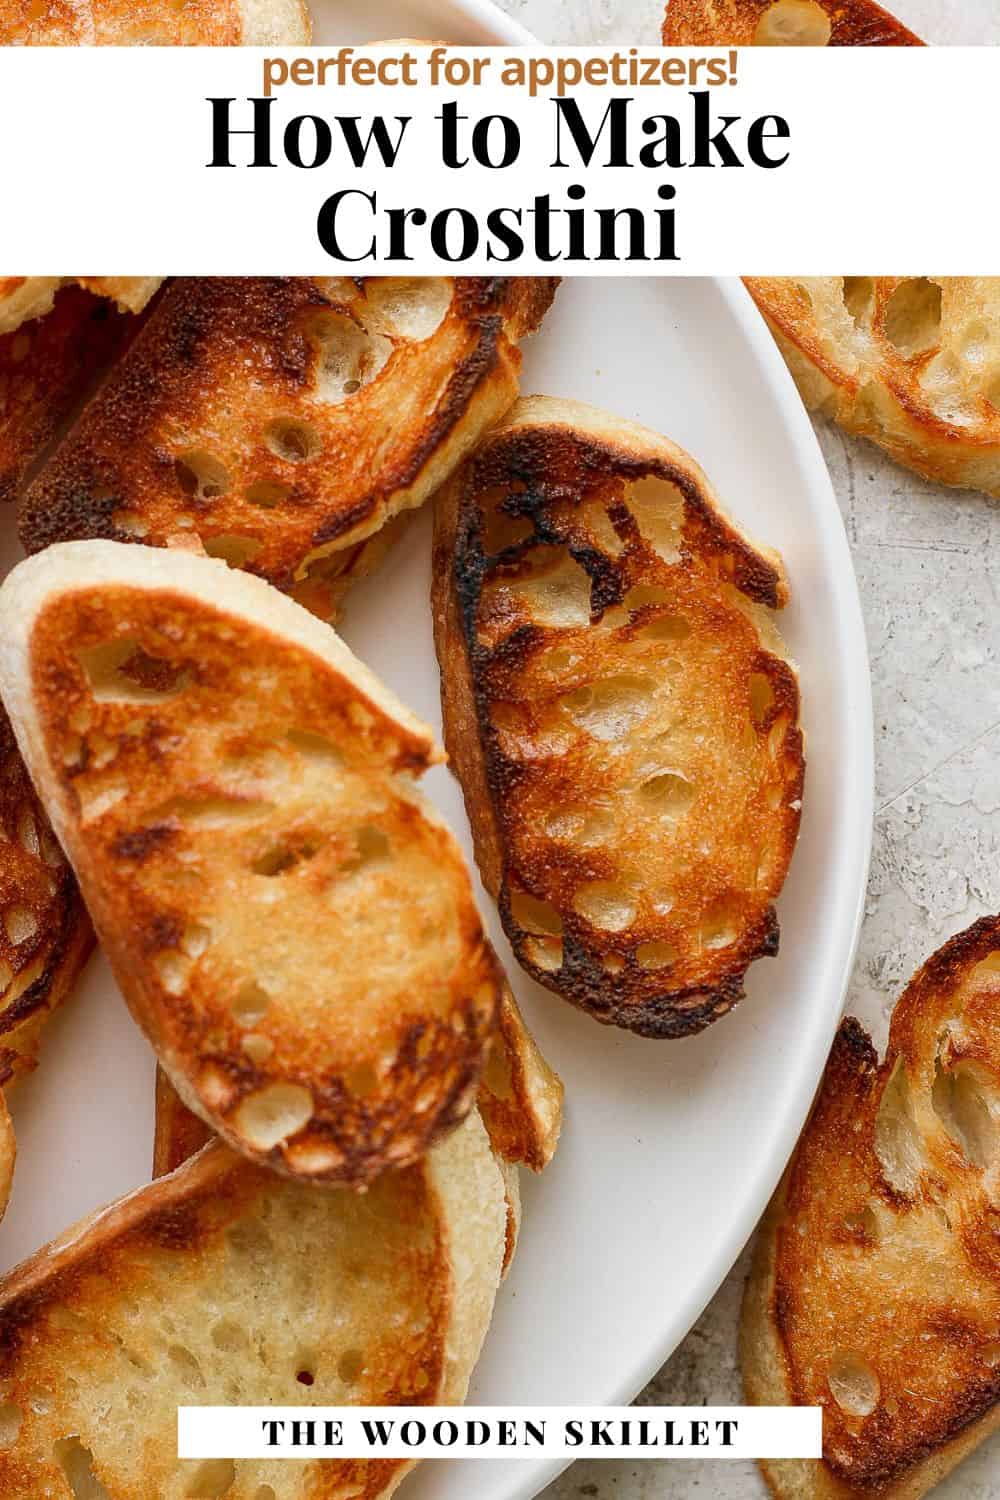 Pinterest image for how to make crostini.